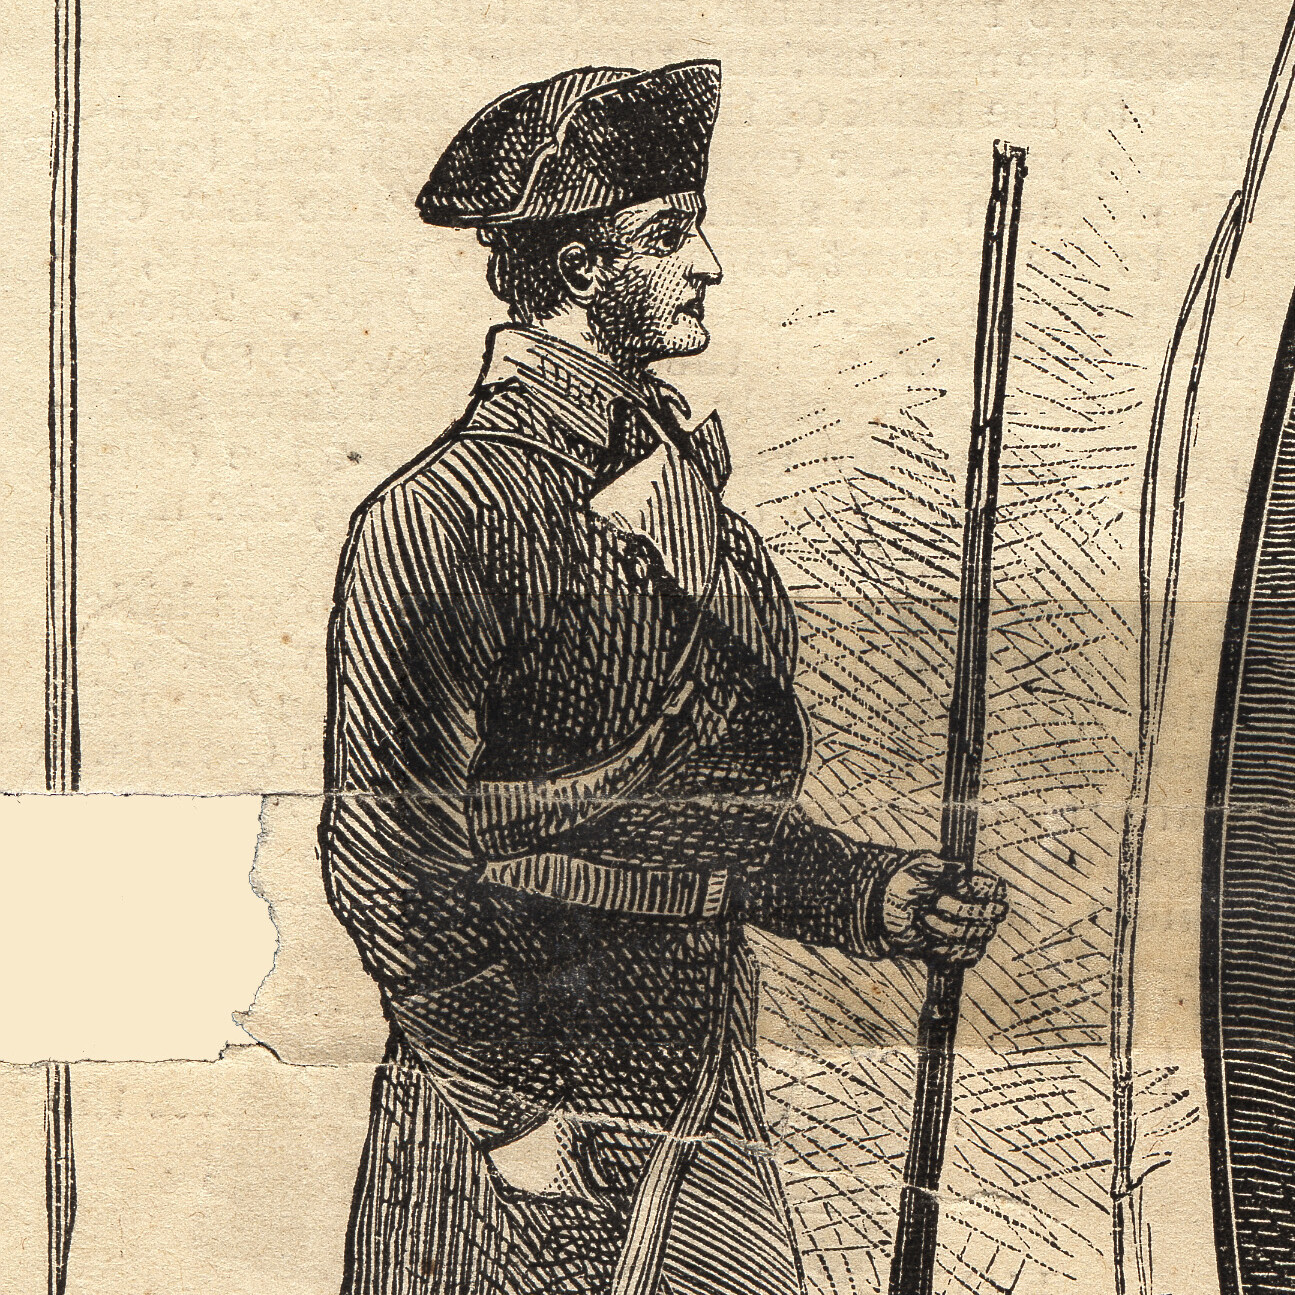 Illustration of man in uniform with gun